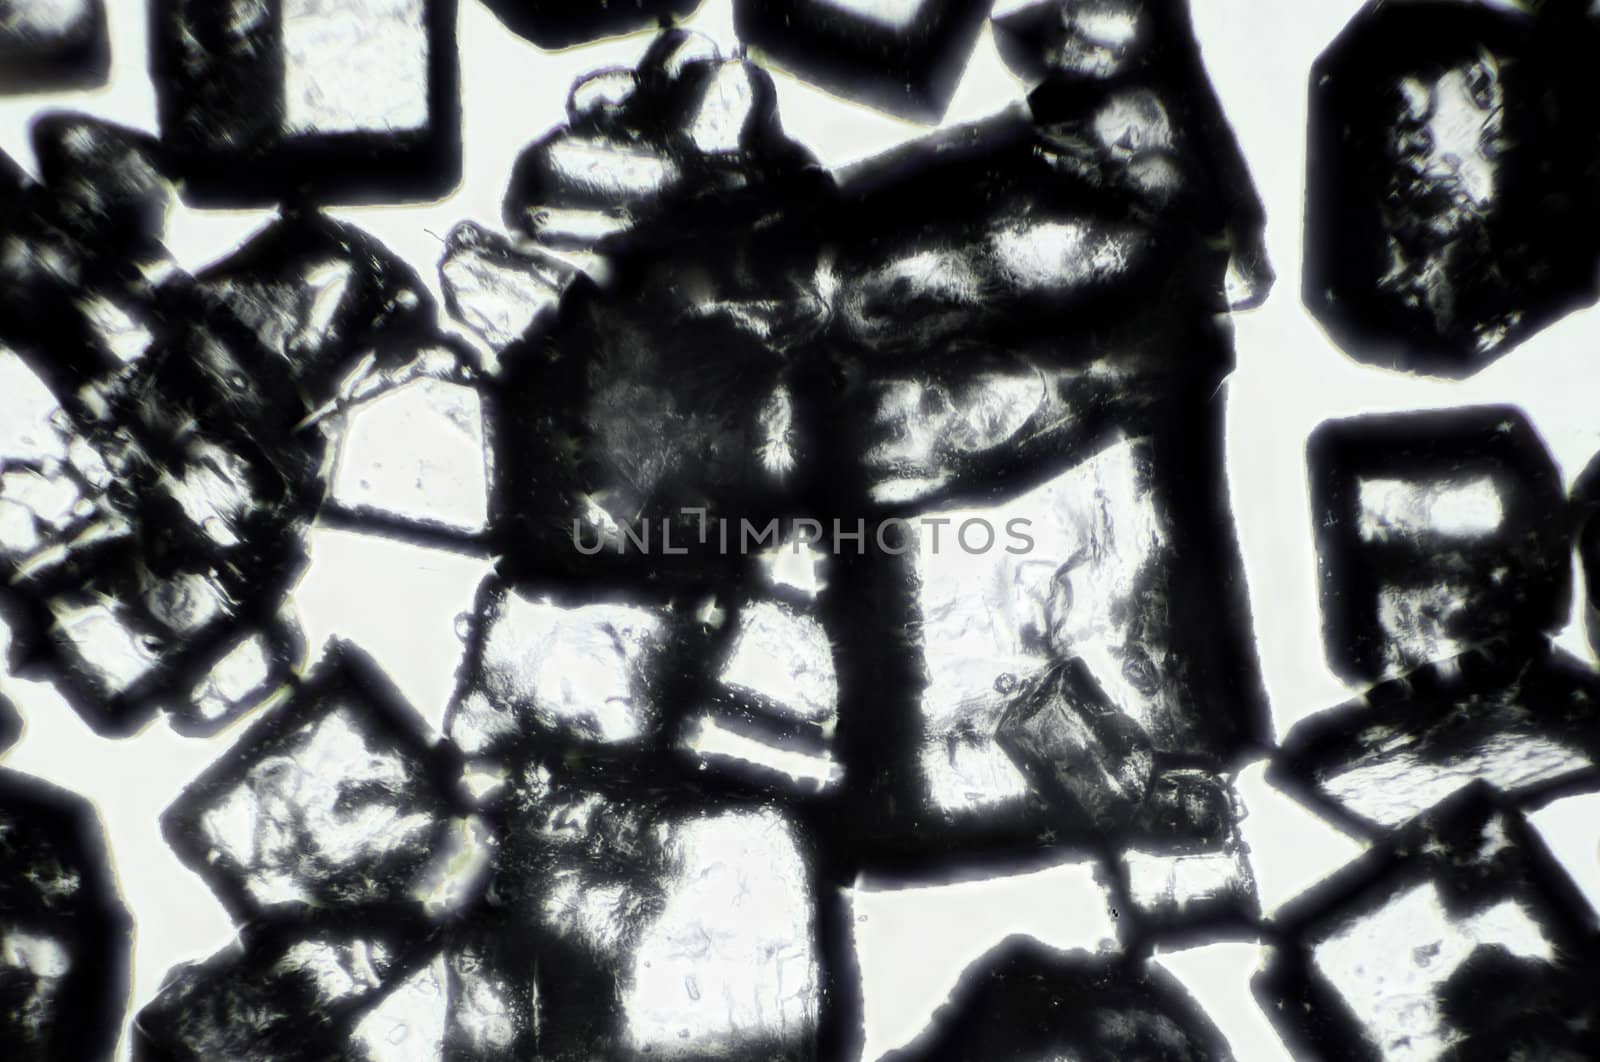 sugar crystals in microscope
